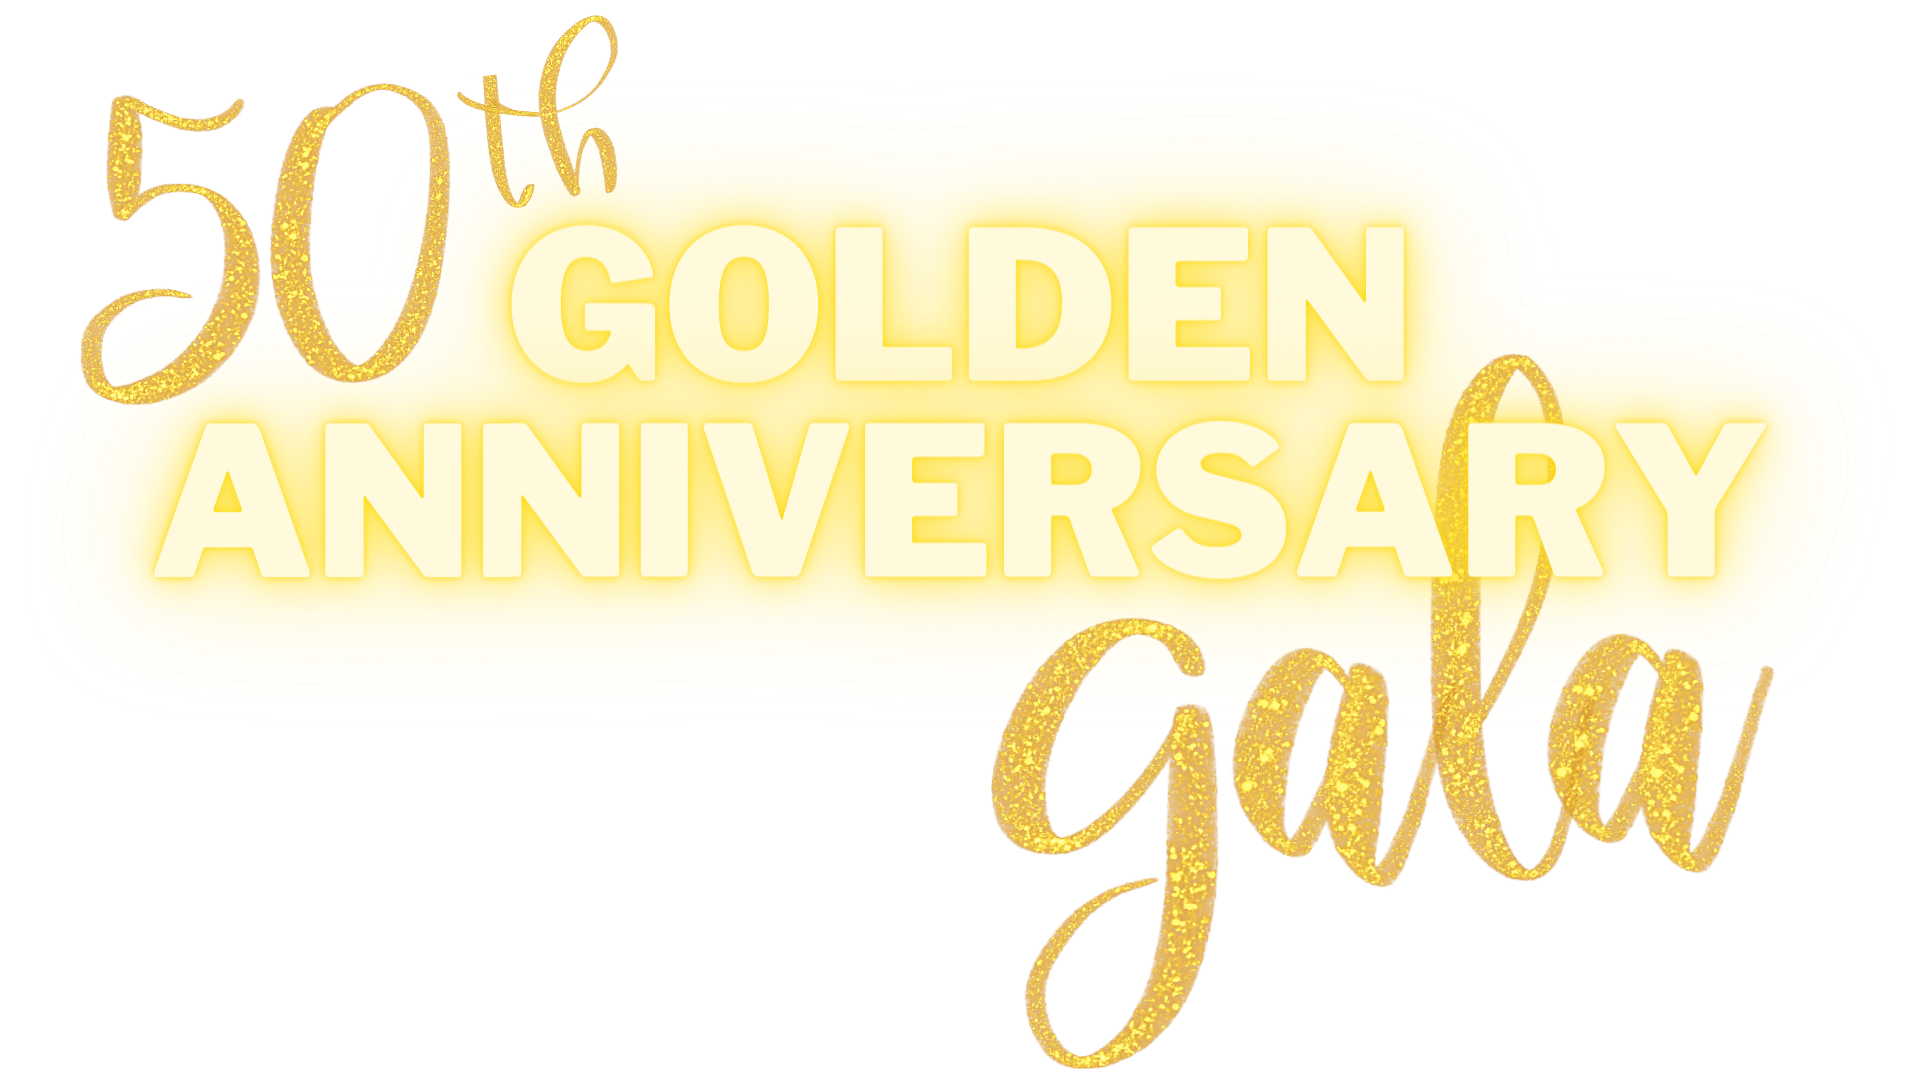 Golden Anniversary Gala title